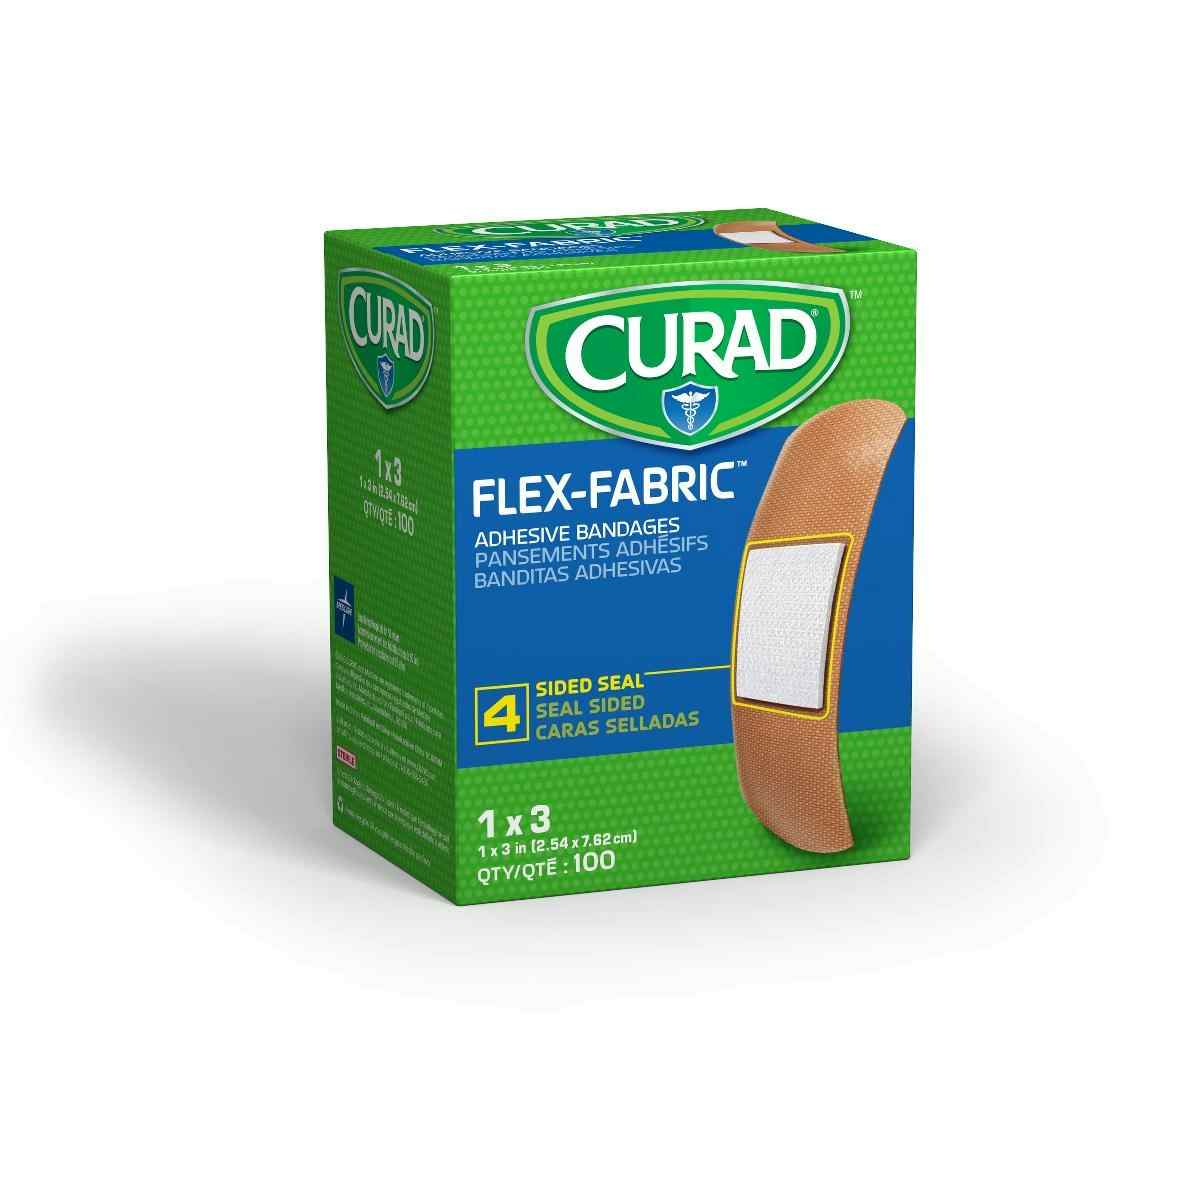 Curad Flex-Fabric Adhesive Bandage, 1" X 3", NON25660, 1" X 3" - Case of 1200